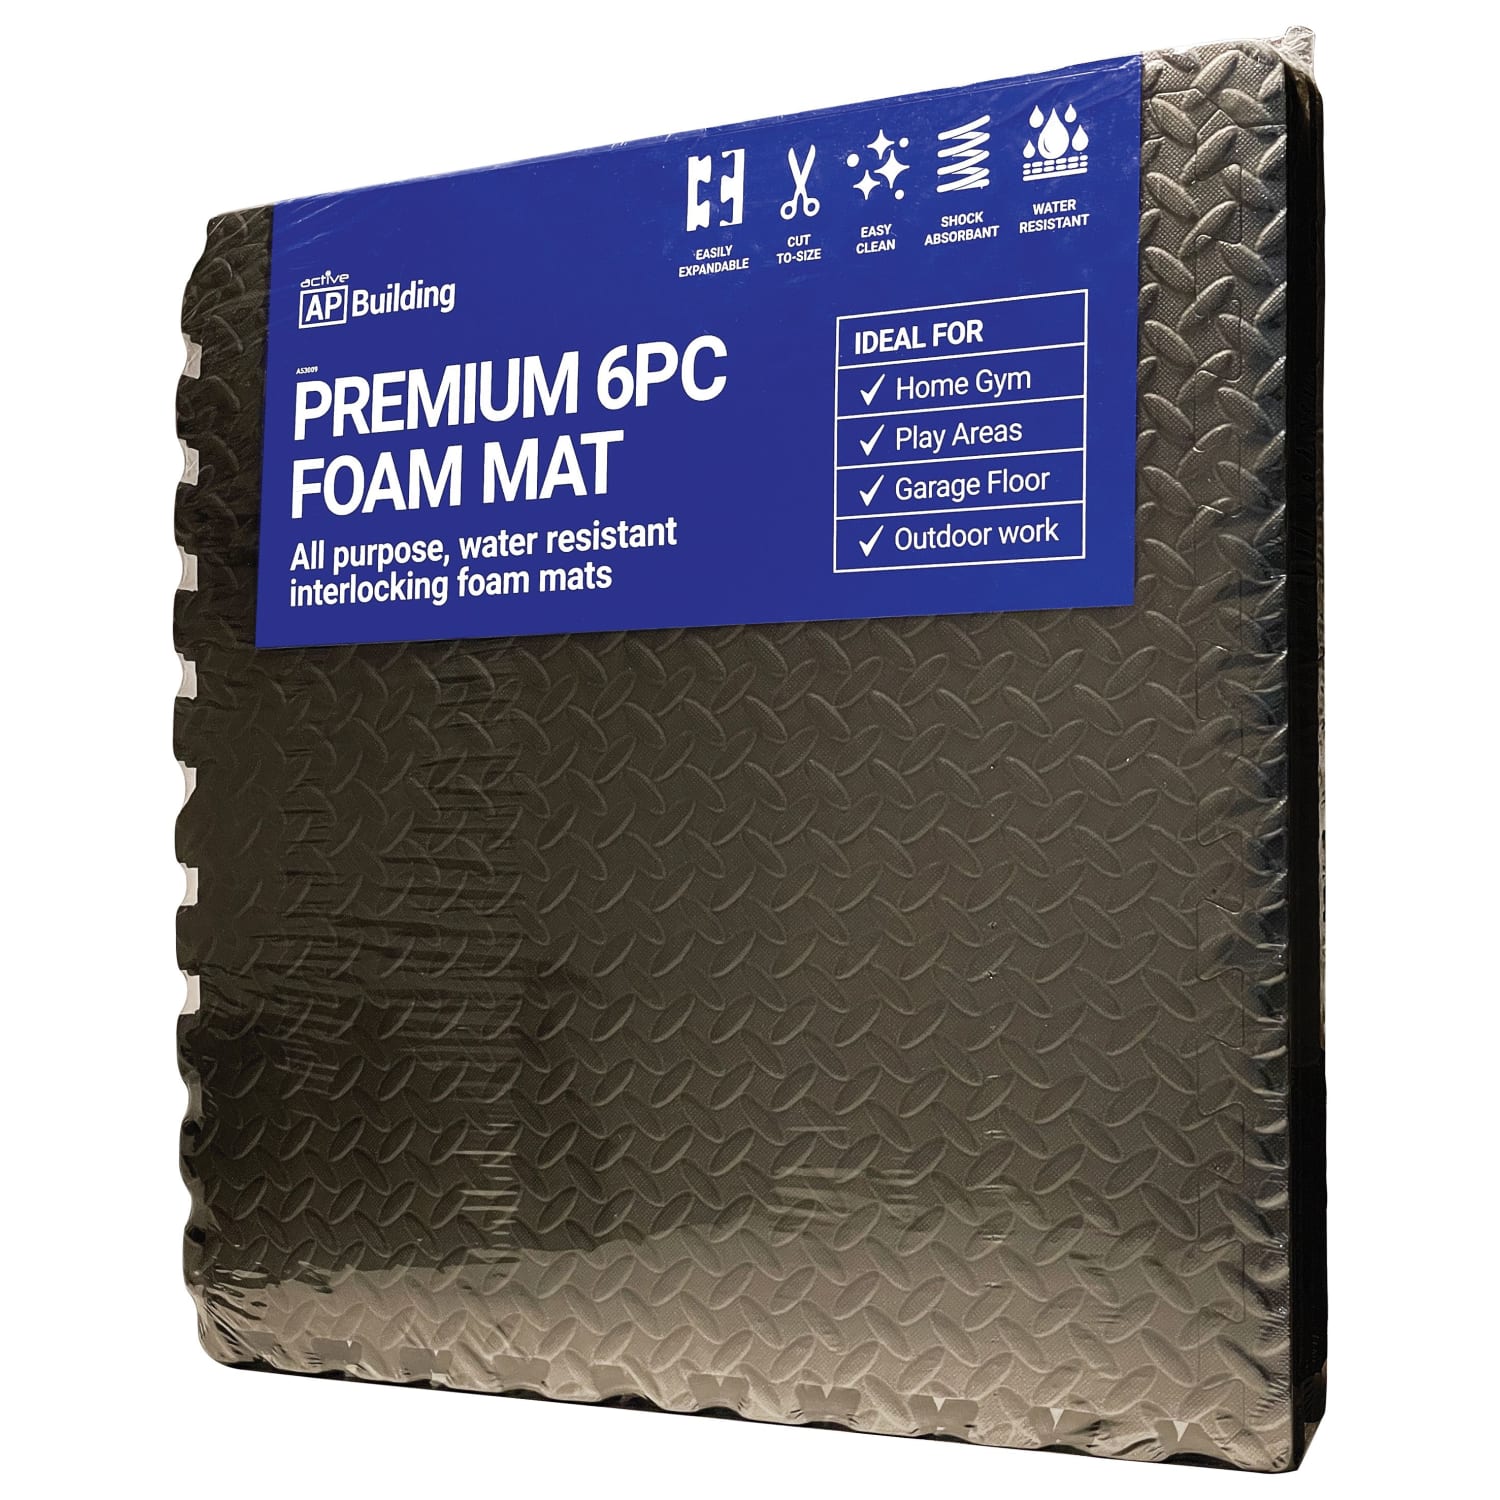 What Are The Best Under Pool Interlocking Foam Mat & Tiles?